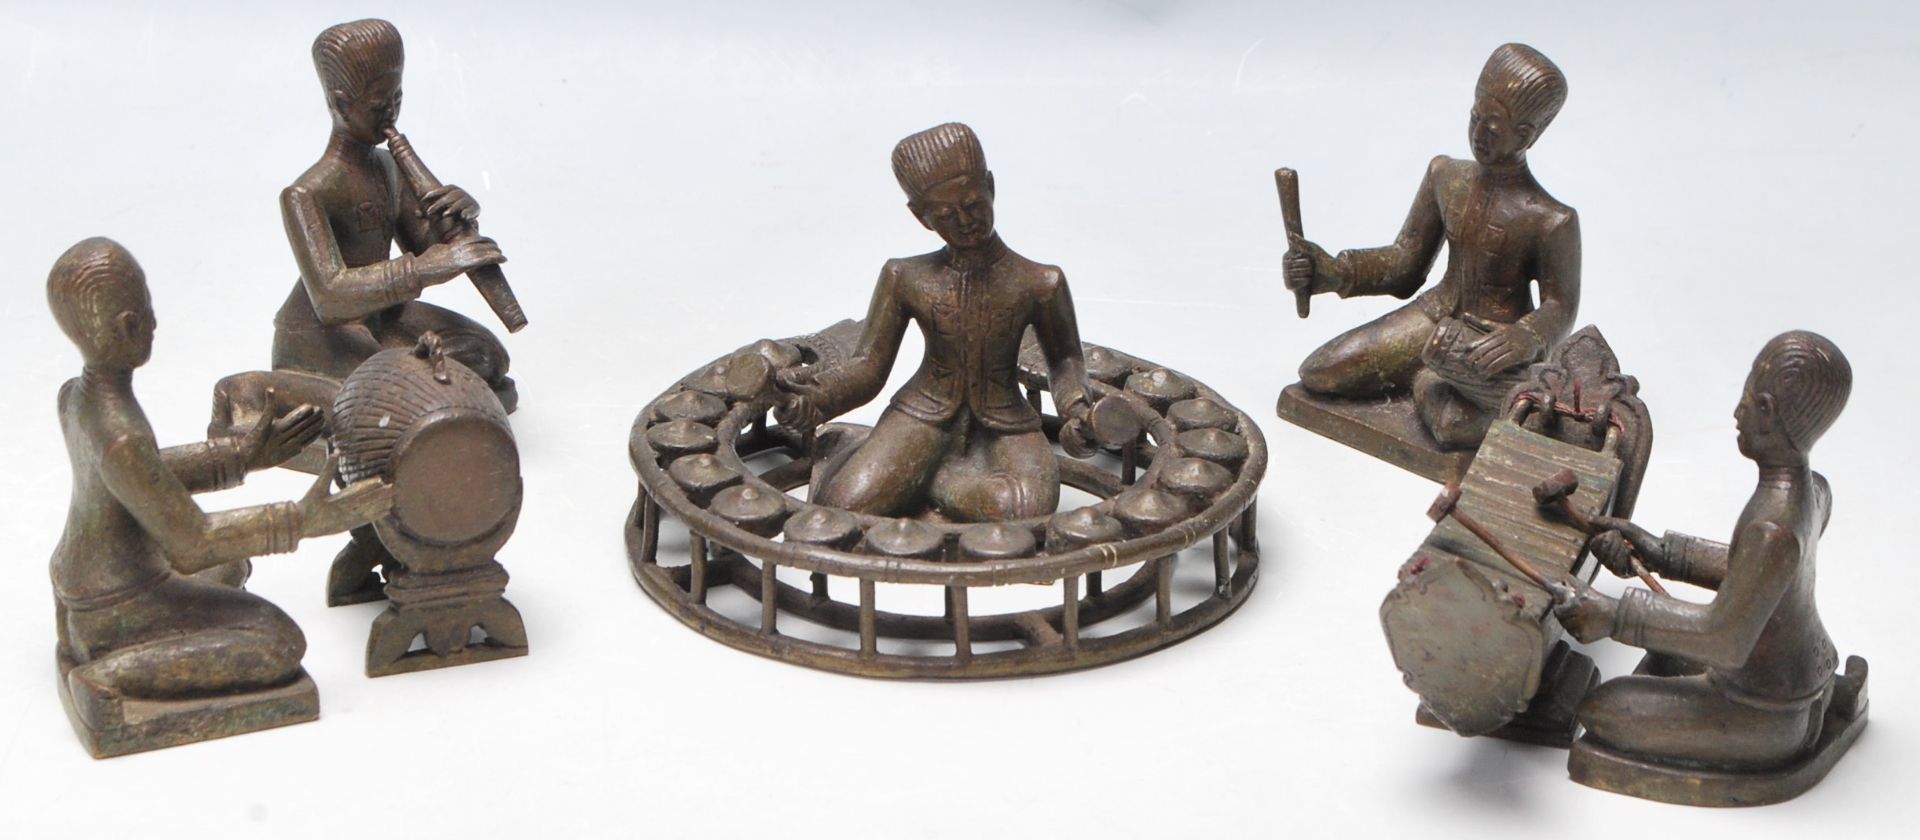 A set of five 19th century Indonesian / Javanese bronze Gamelan figurines featuring musicians